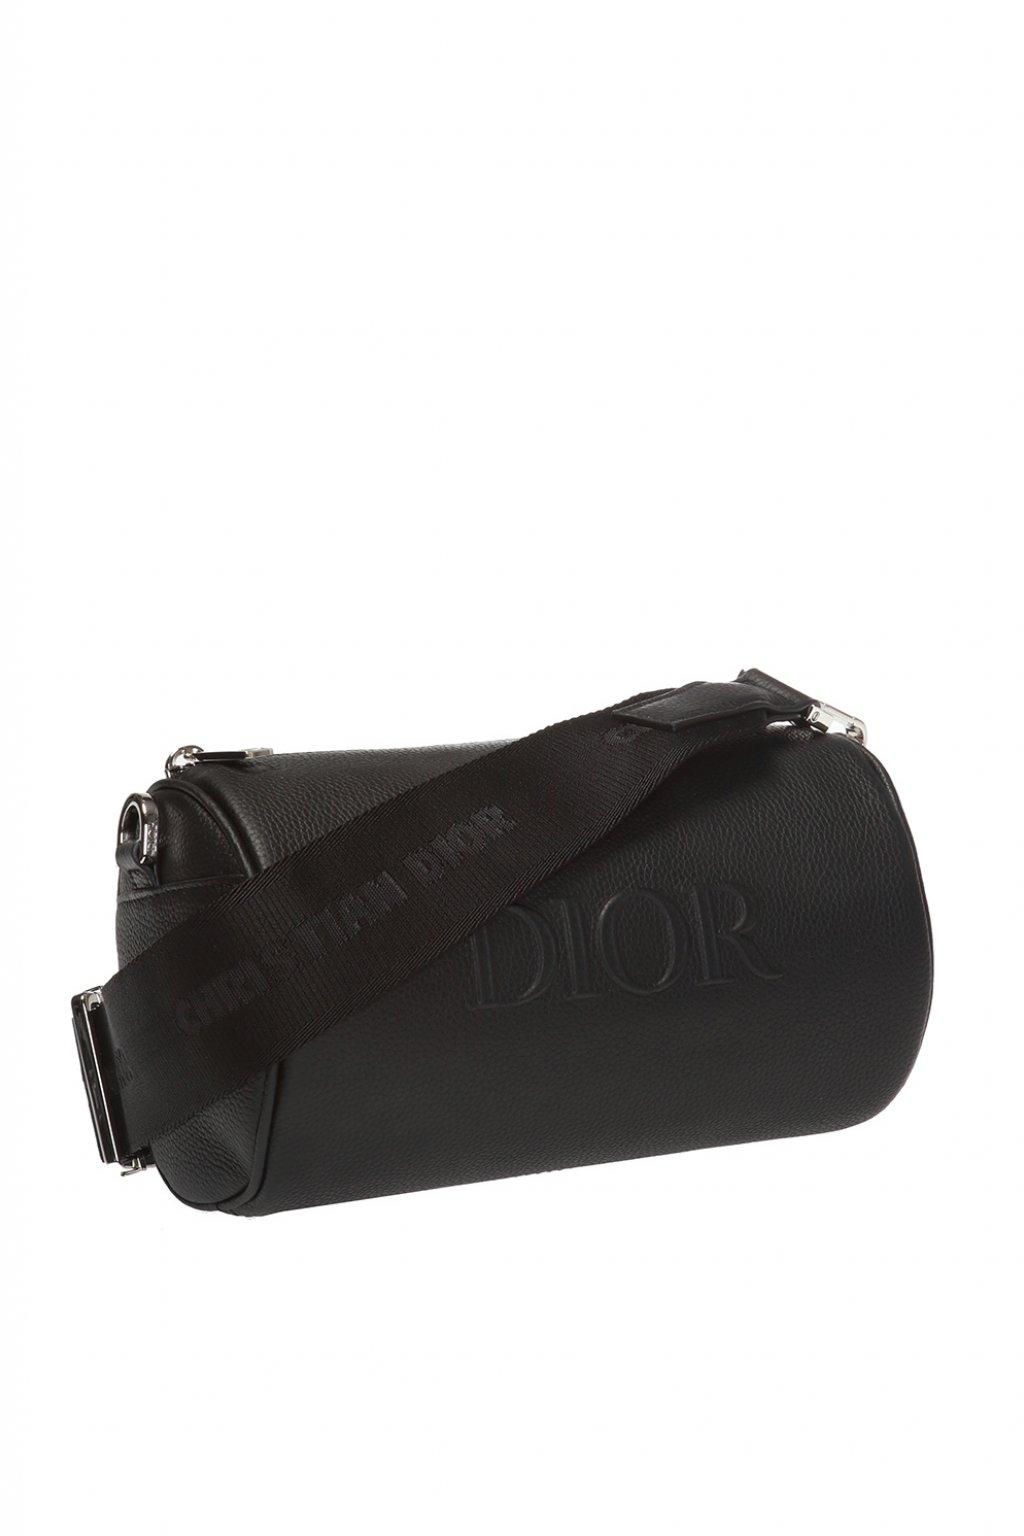 dior roller pouch crossbody bag